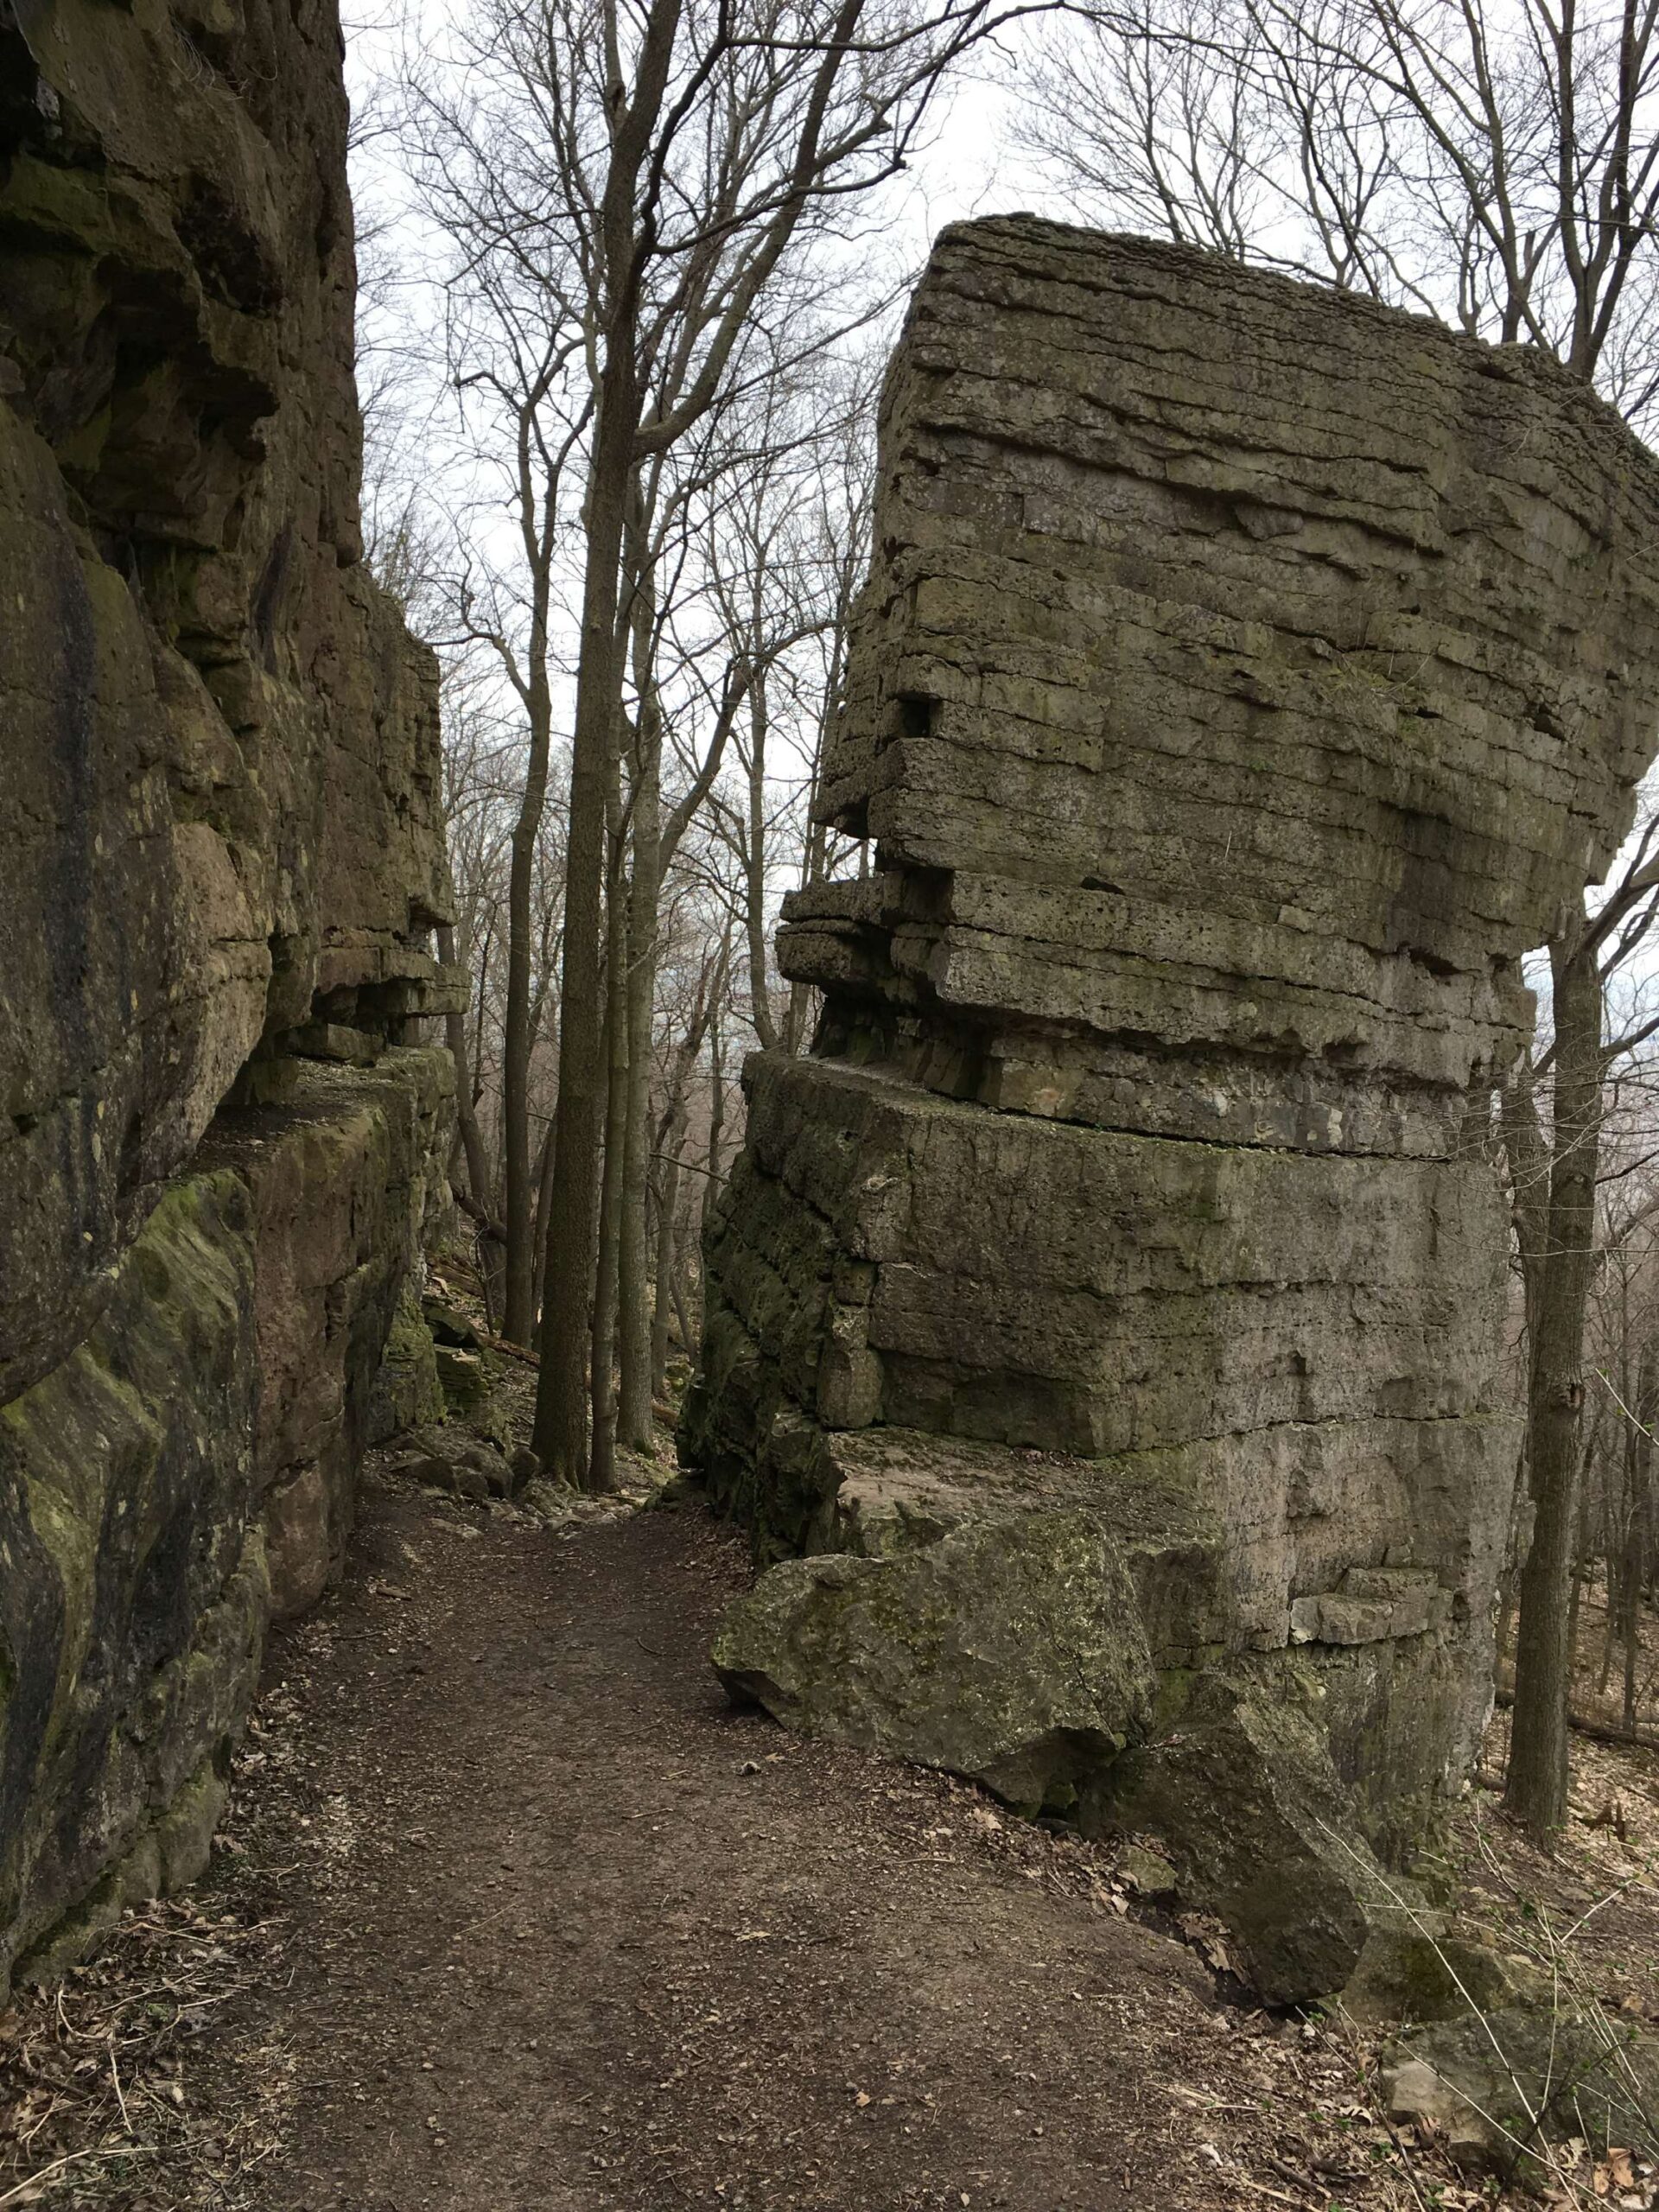 A vertical crack in the rock